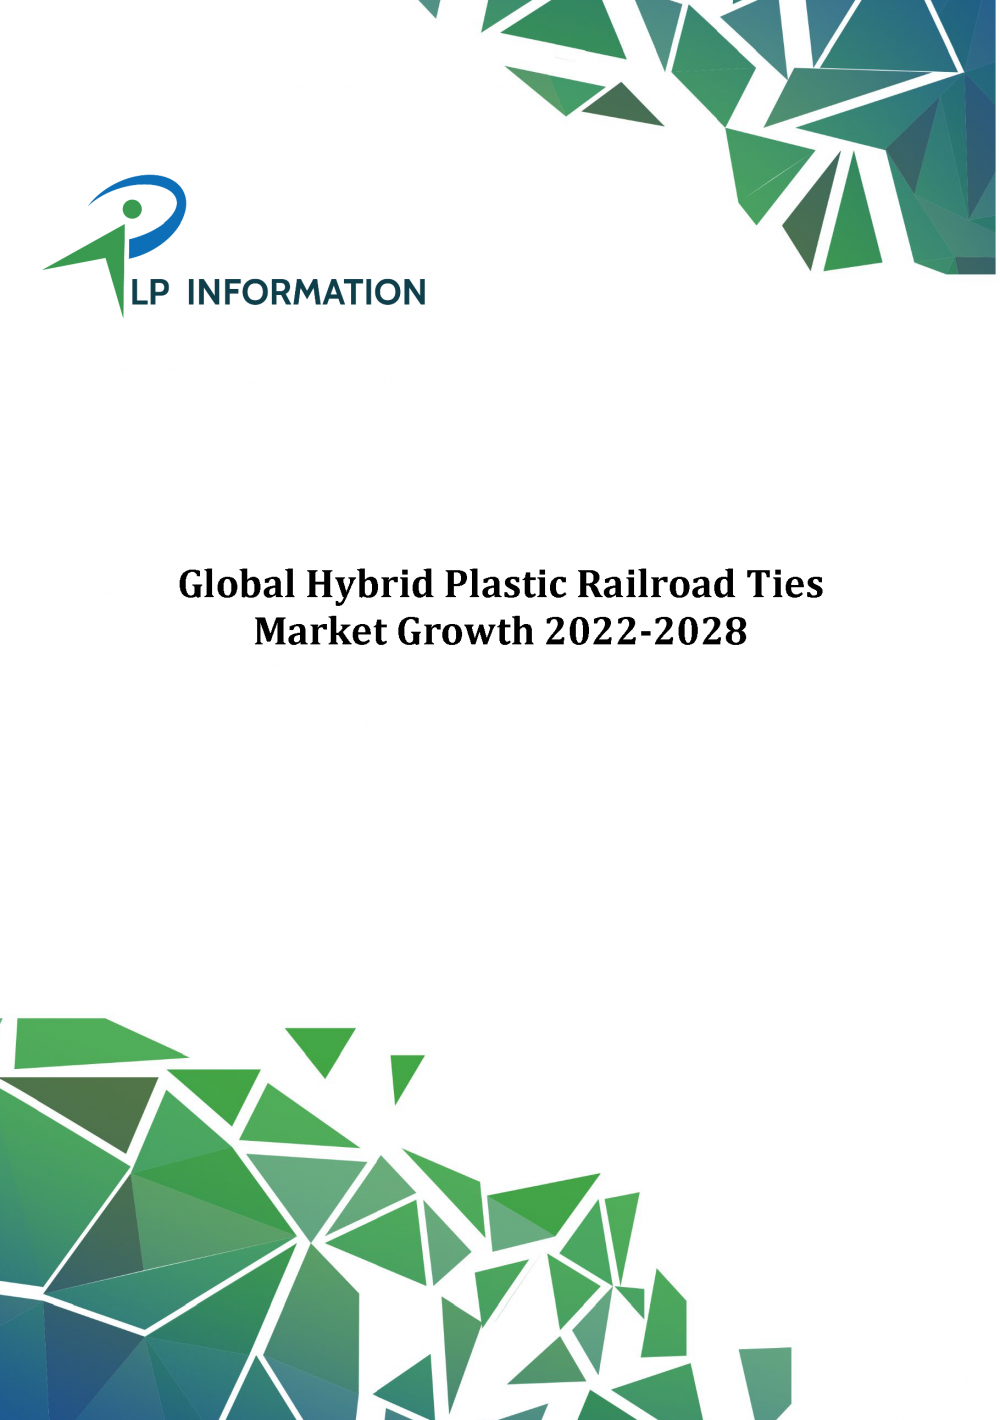 Global Hybrid Plastic Railroad Ties Market Growth 2022-2028